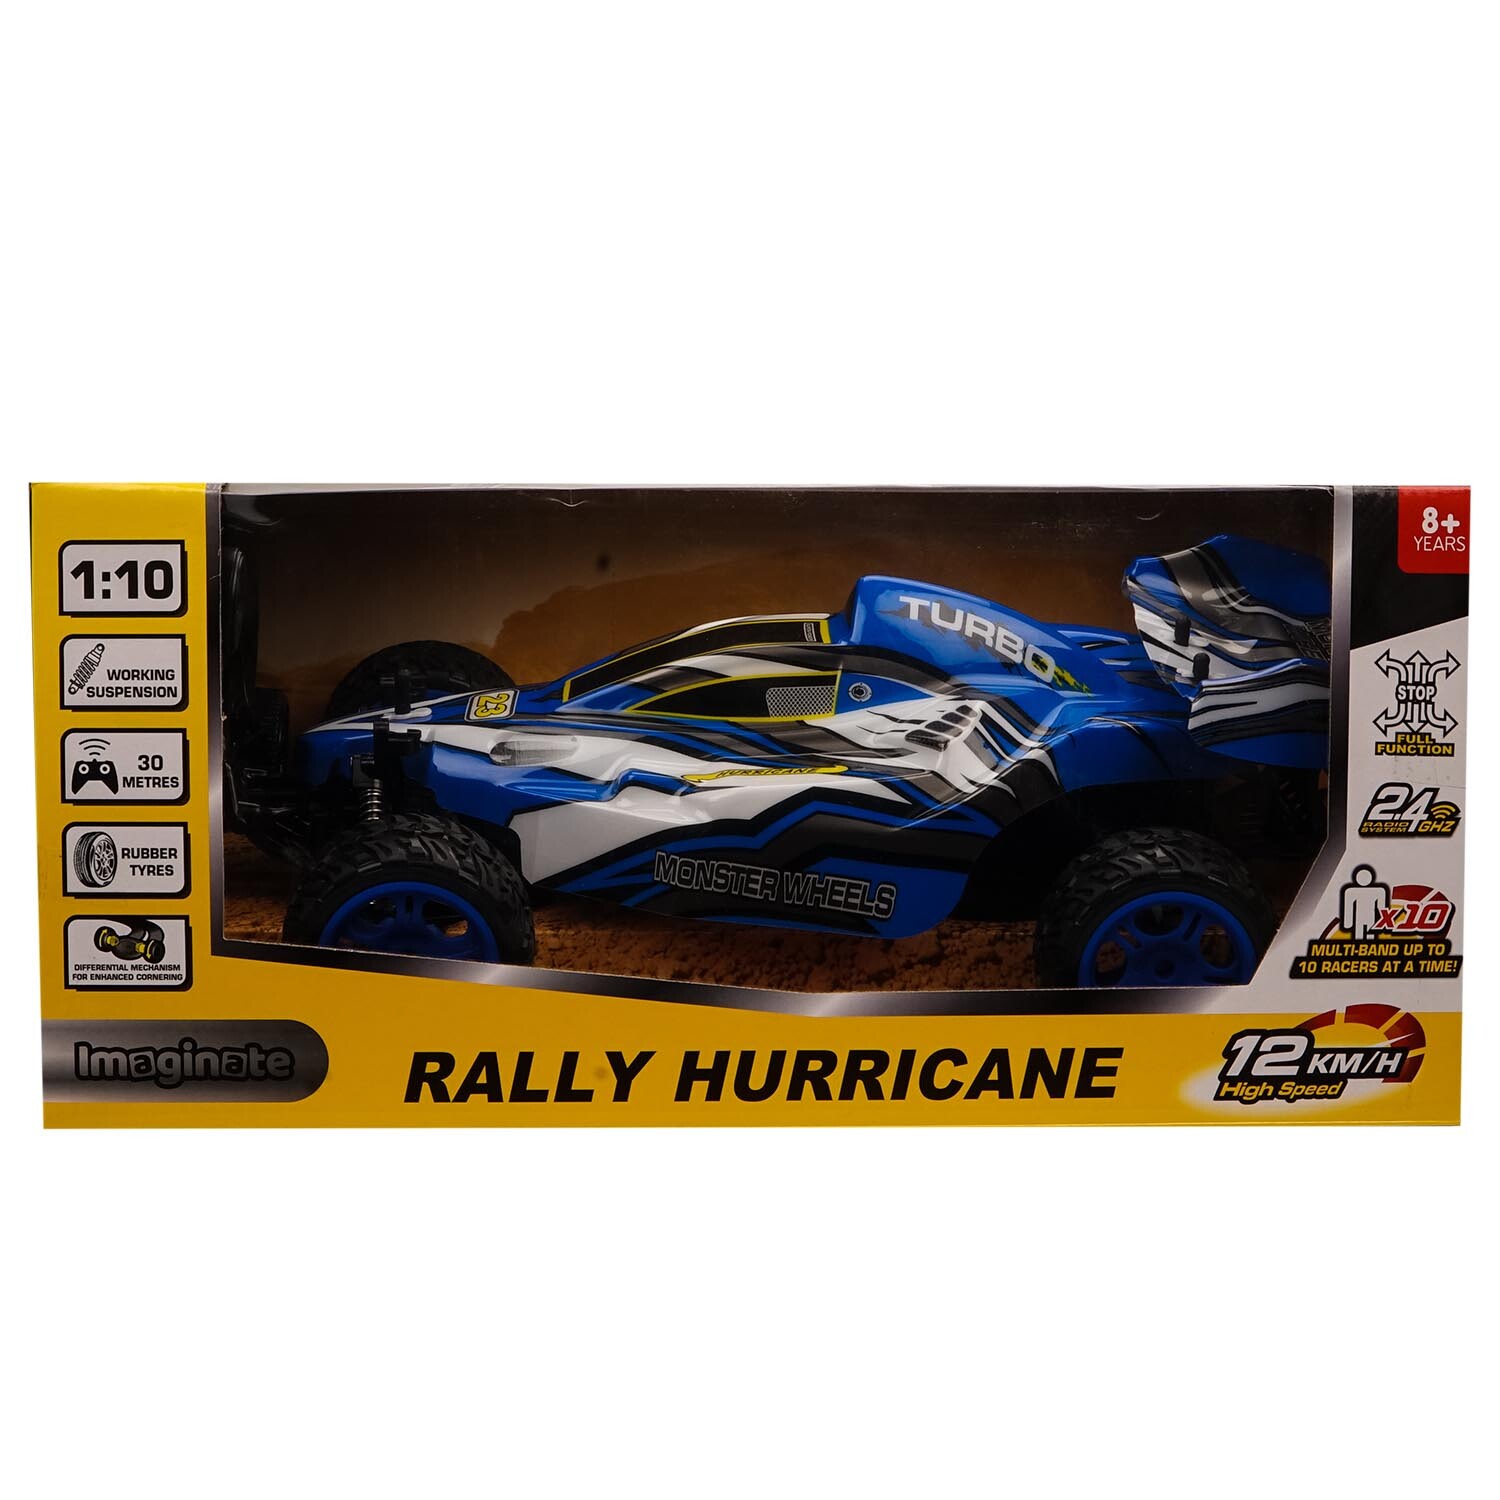 Imaginate Rally Hurricane Racer Image 1